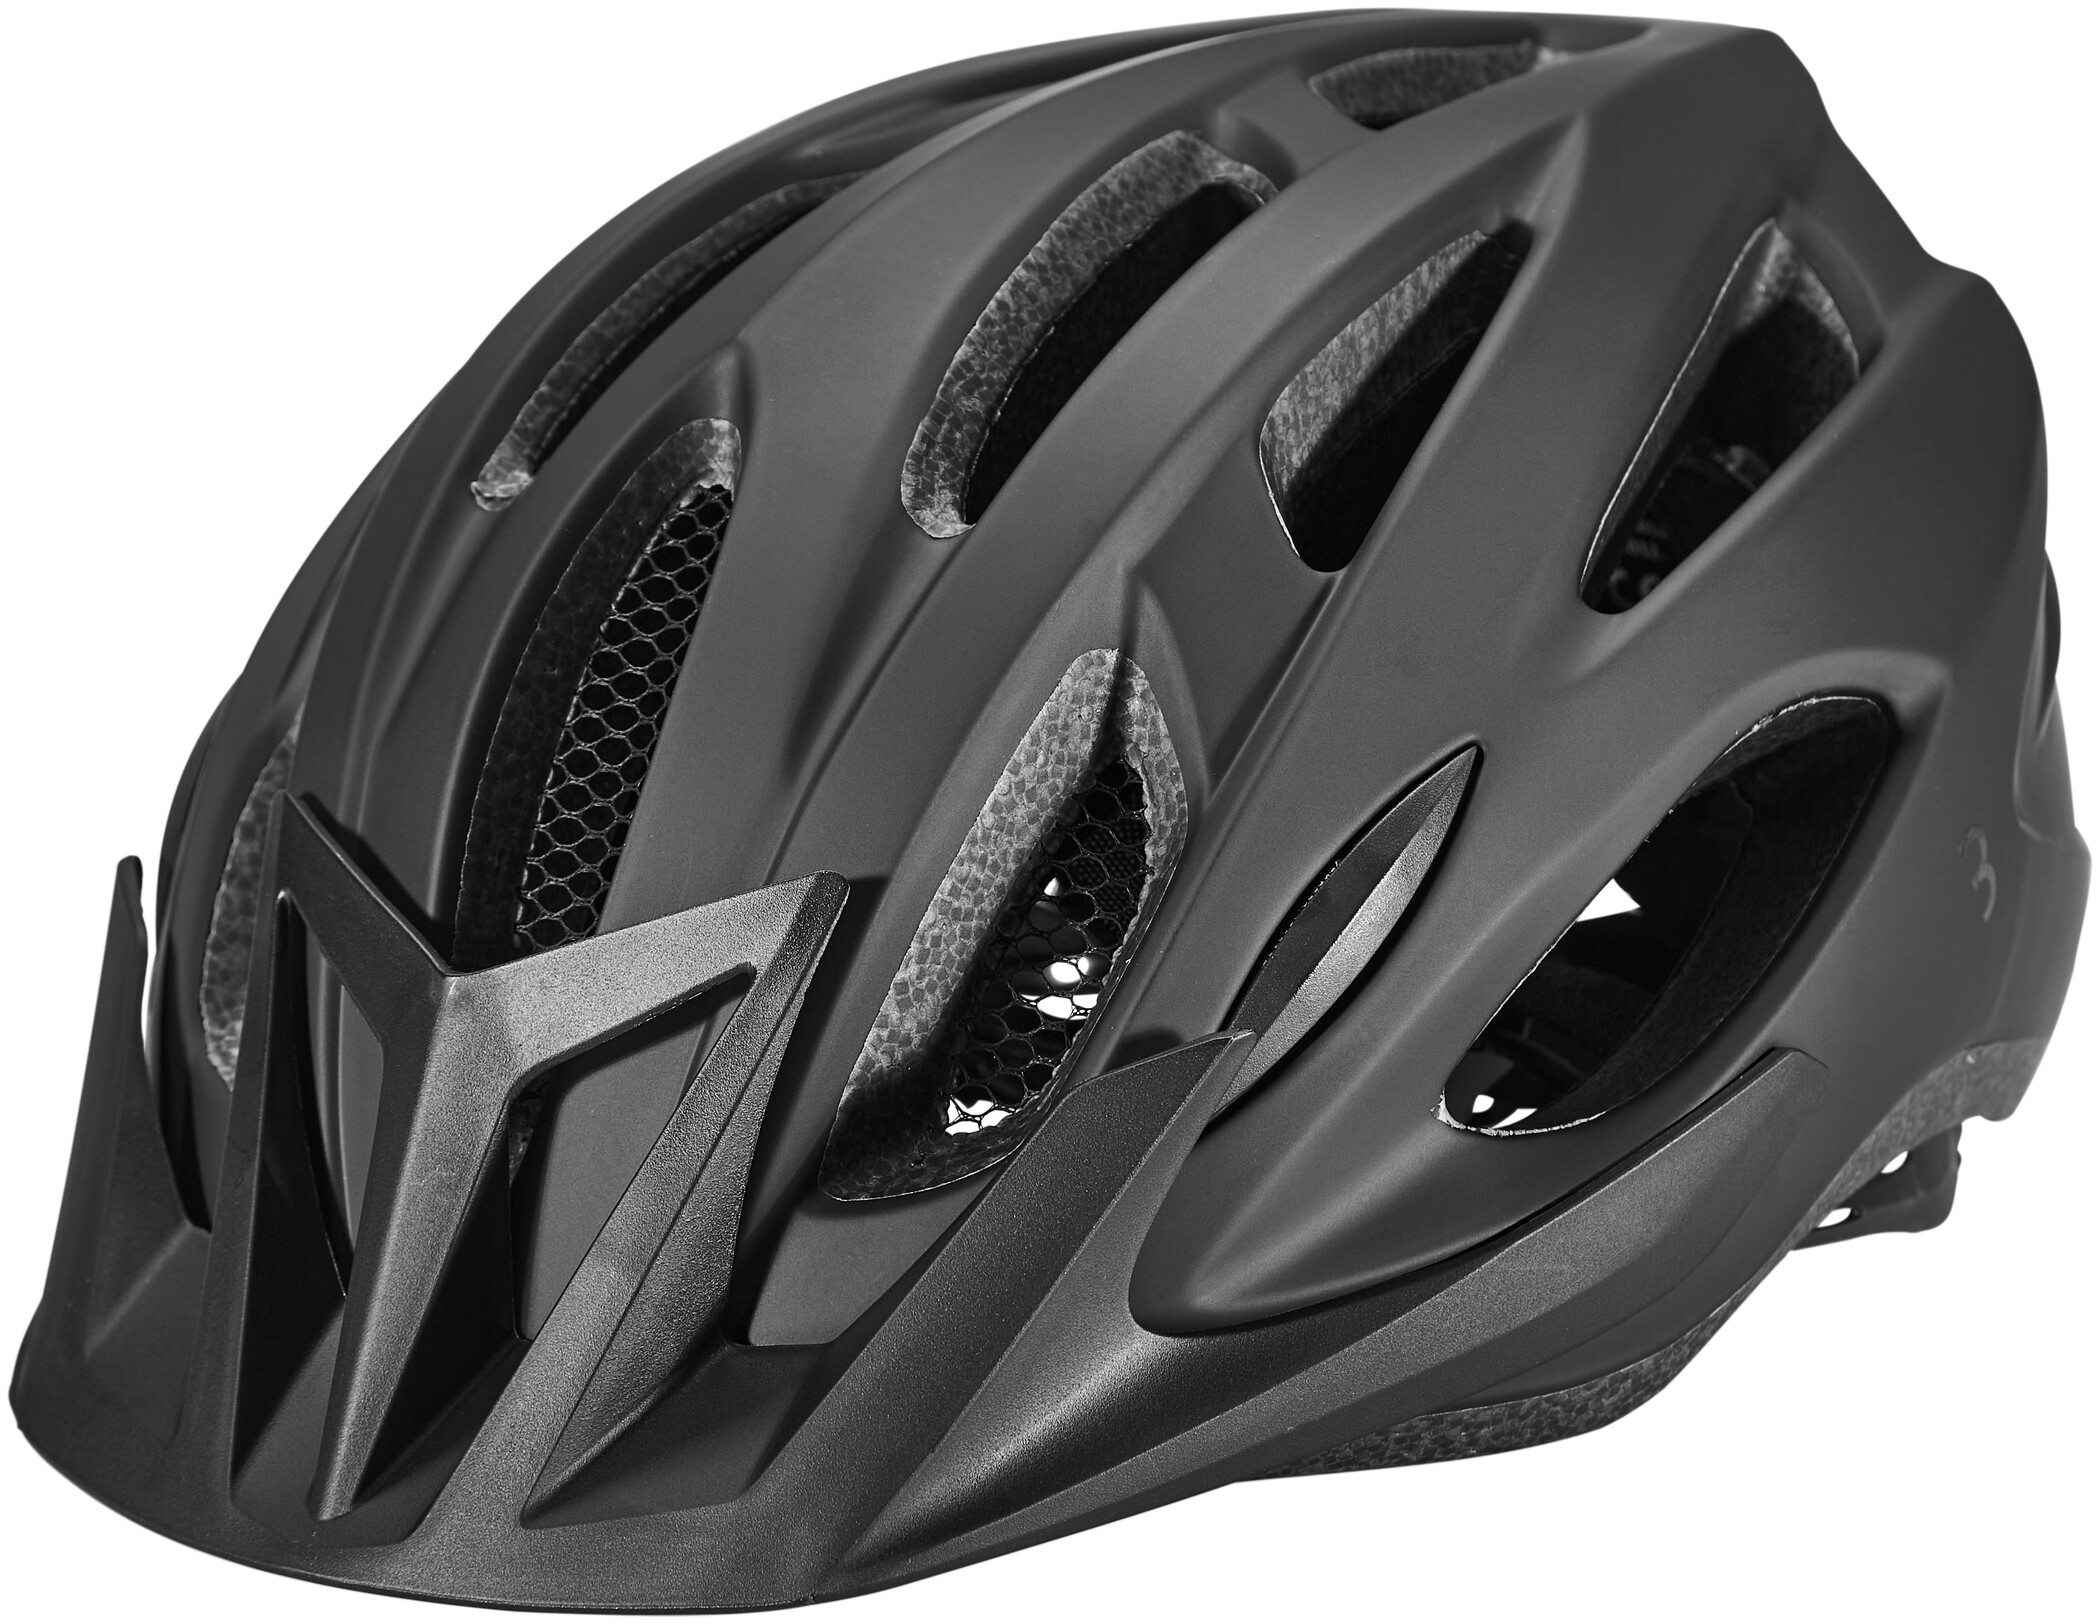 Fahrradhelm für Erwachsene Mountainbike Helm MTB Fahrrad Radhelme,Verstellbare 